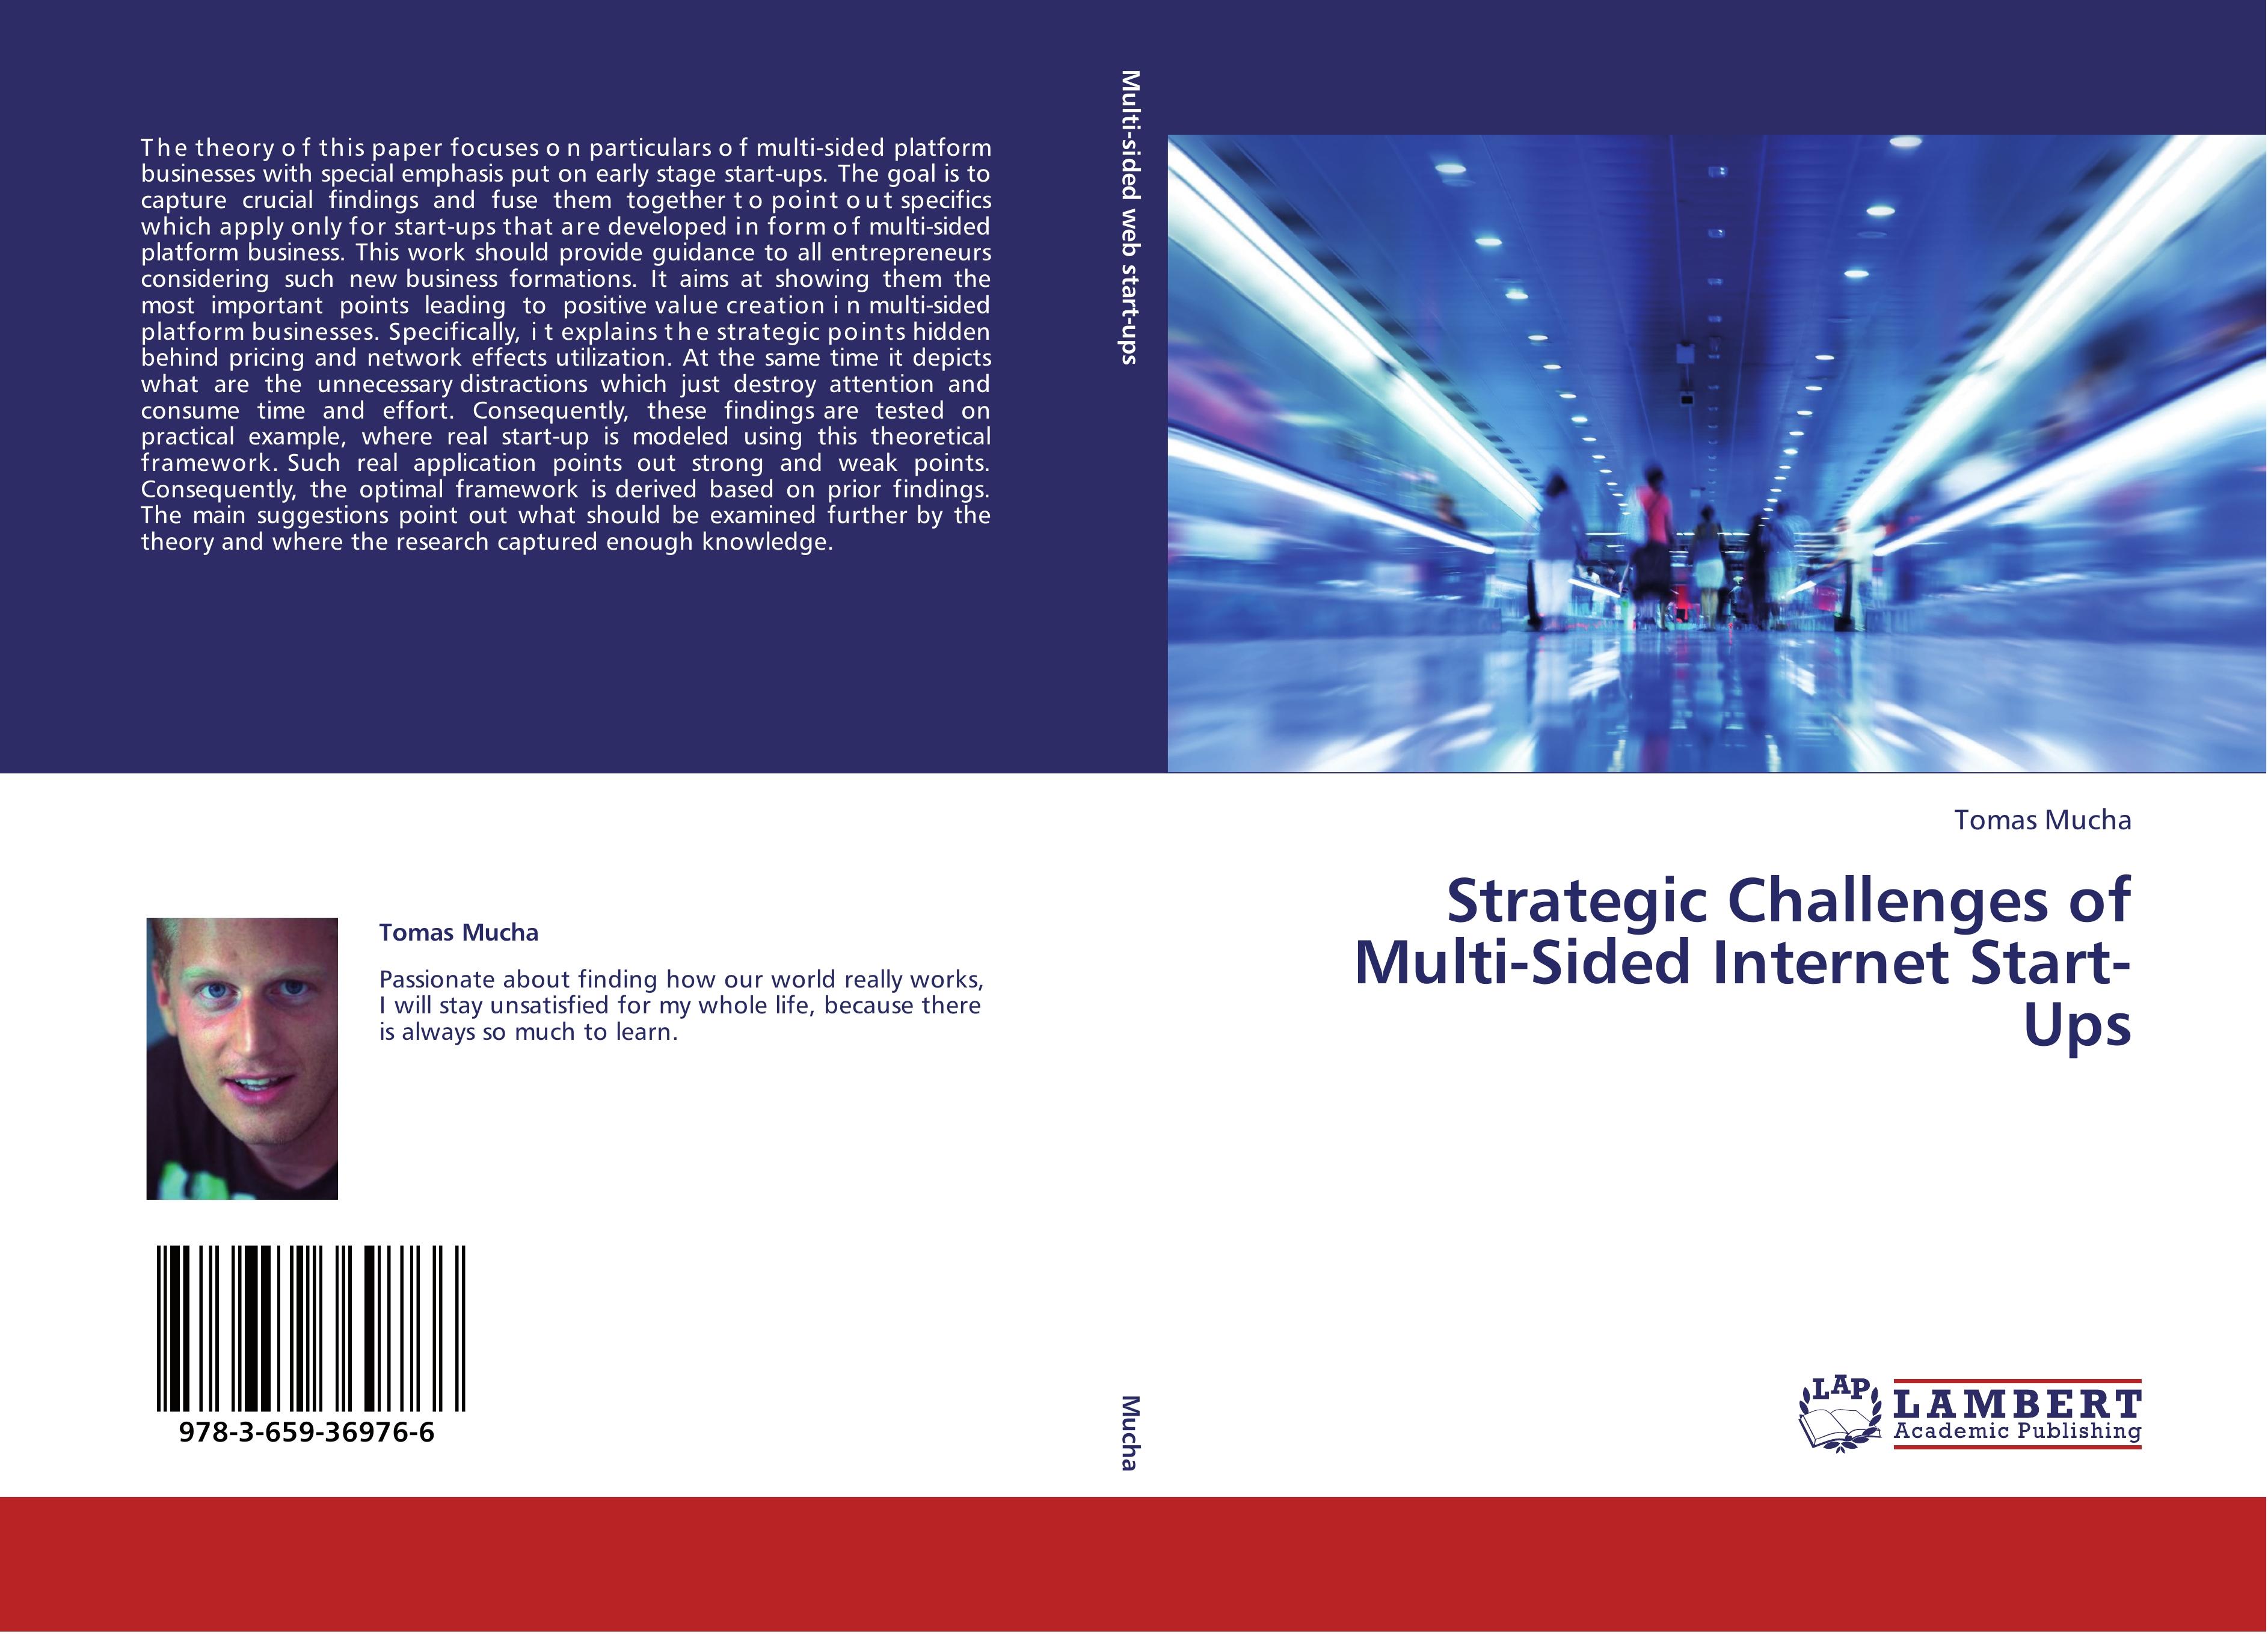 Strategic Challenges of Multi-Sided Internet Start-Ups - Tomas Mucha